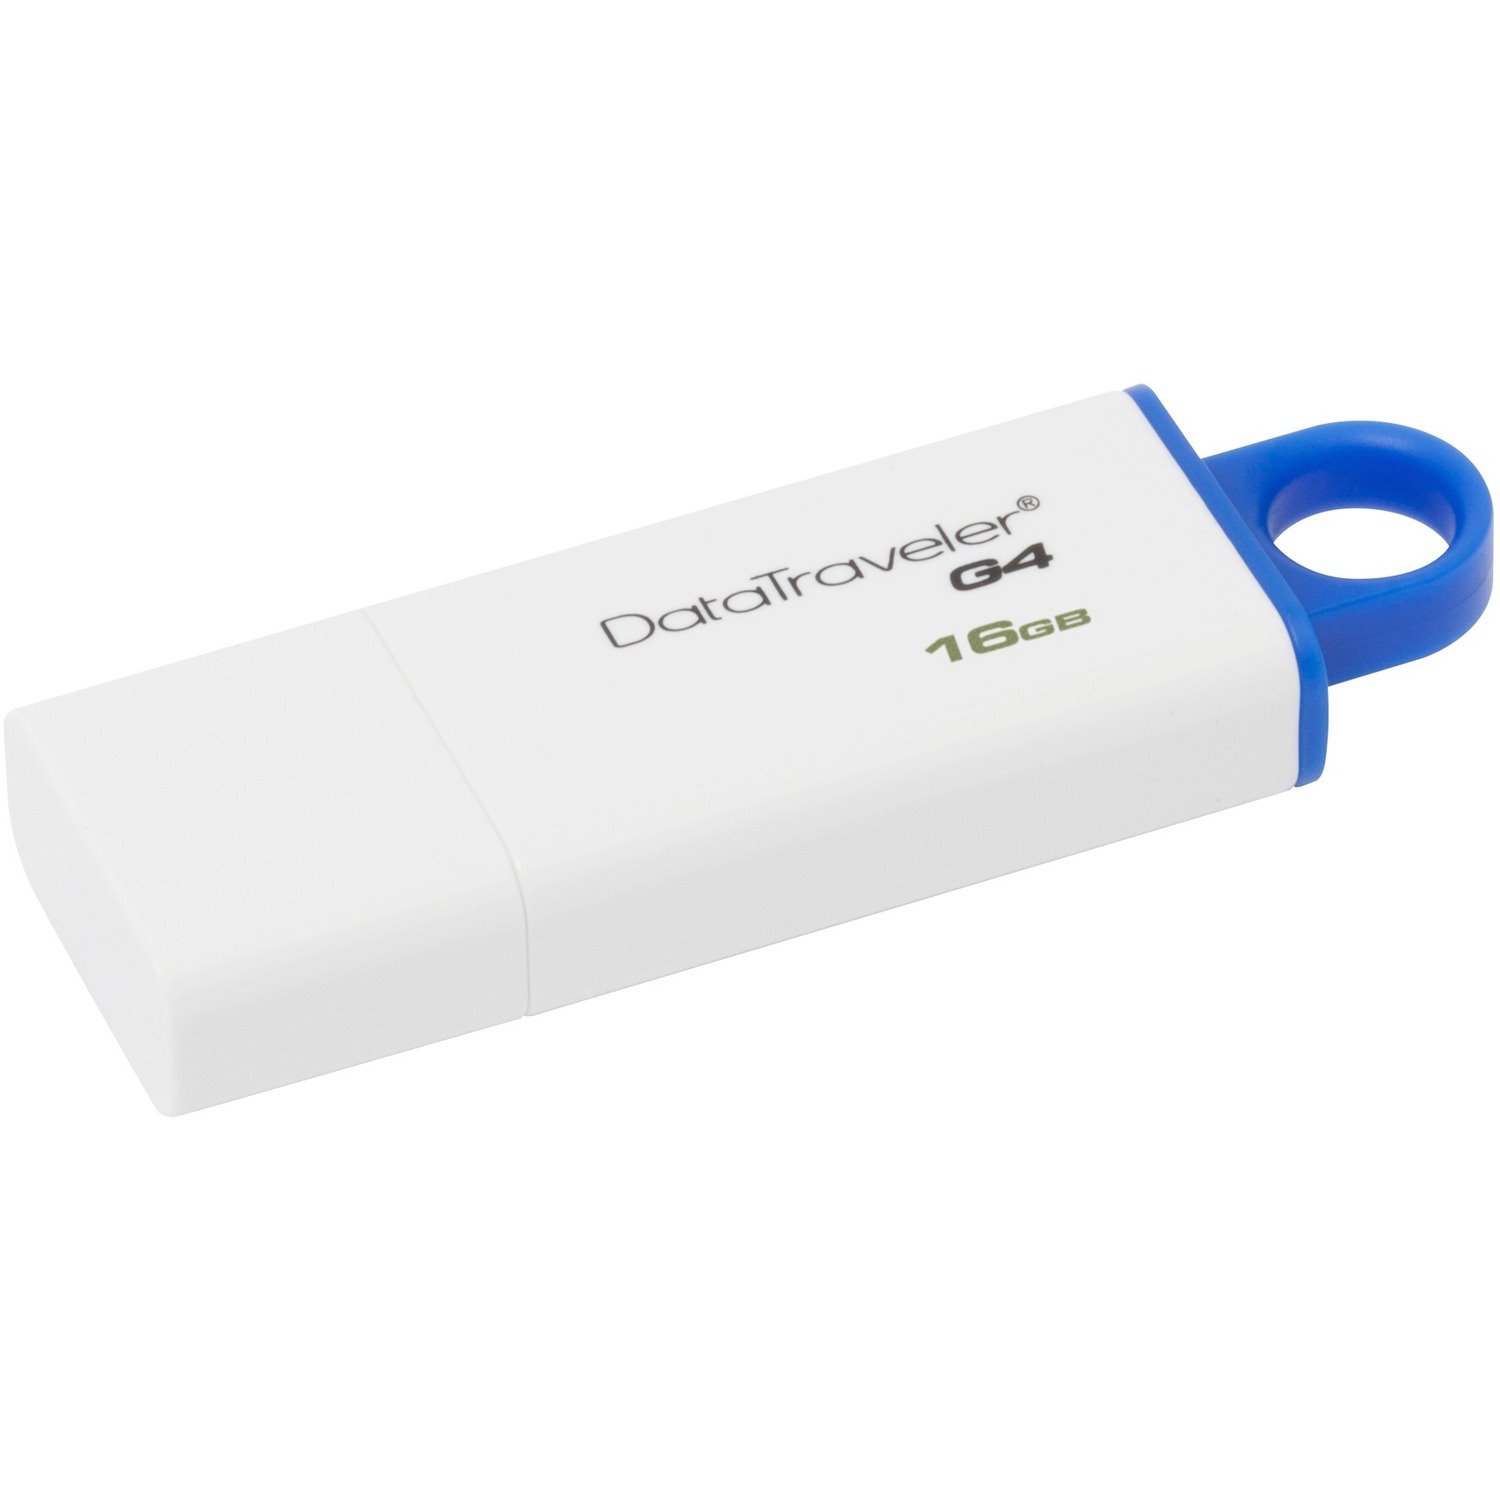 Kingston DataTraveler G4 16 GB USB 3.0 Flash Drive - Blue, White